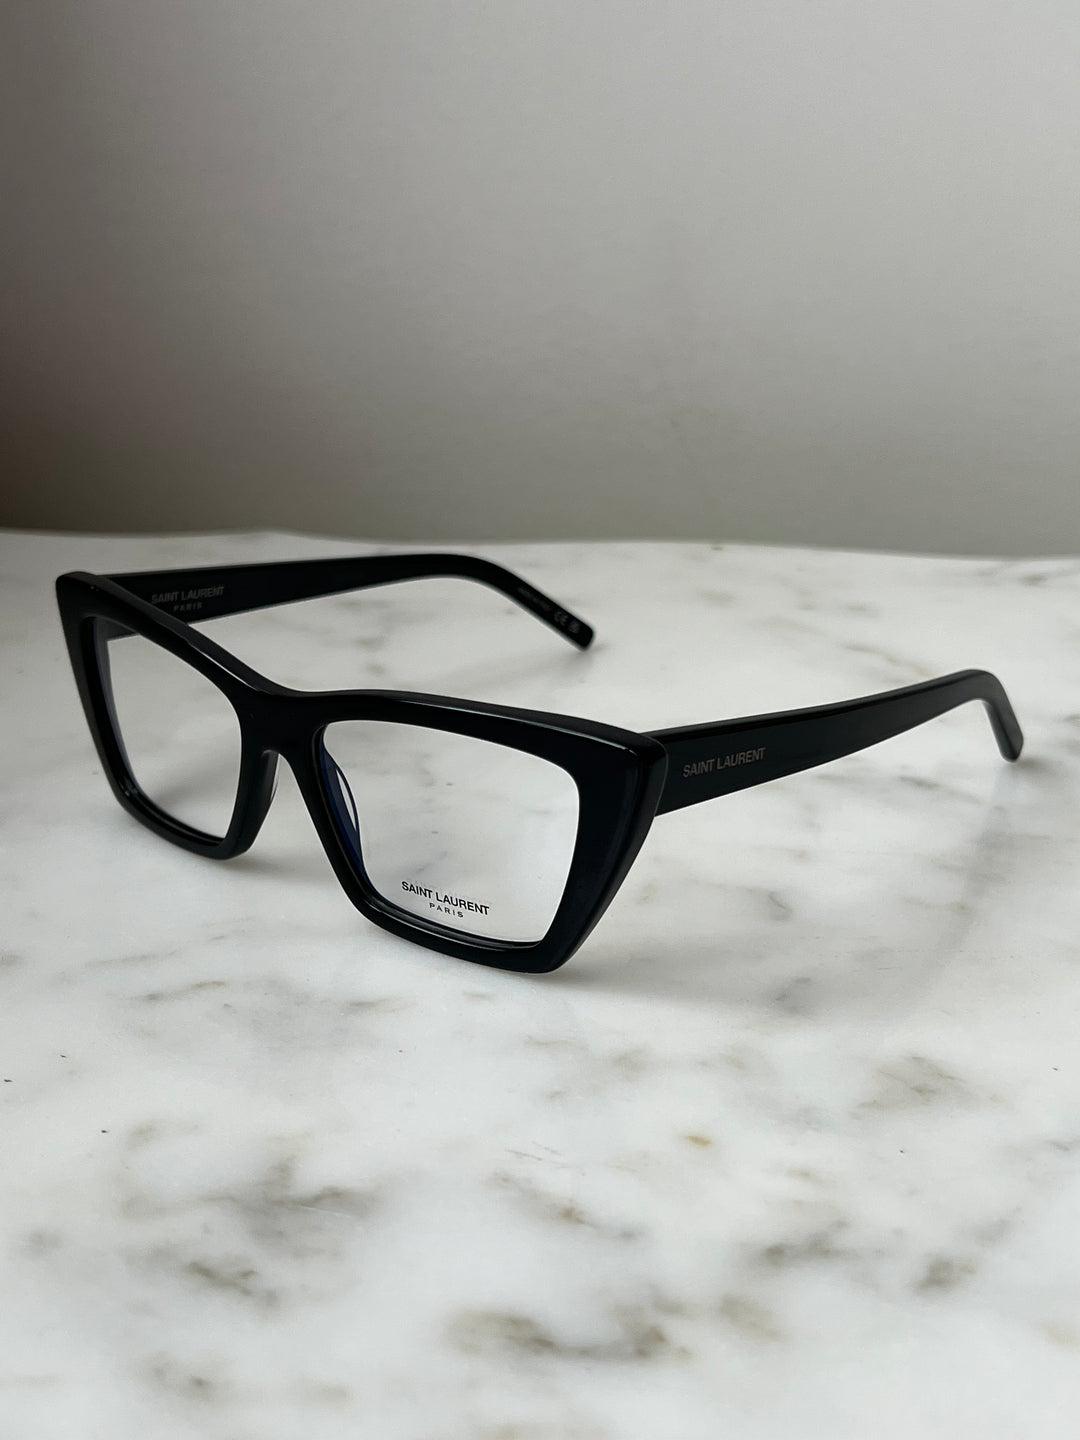 Saint Laurent SL291 Mica Cat Eye Eyeglasses Frames in Black